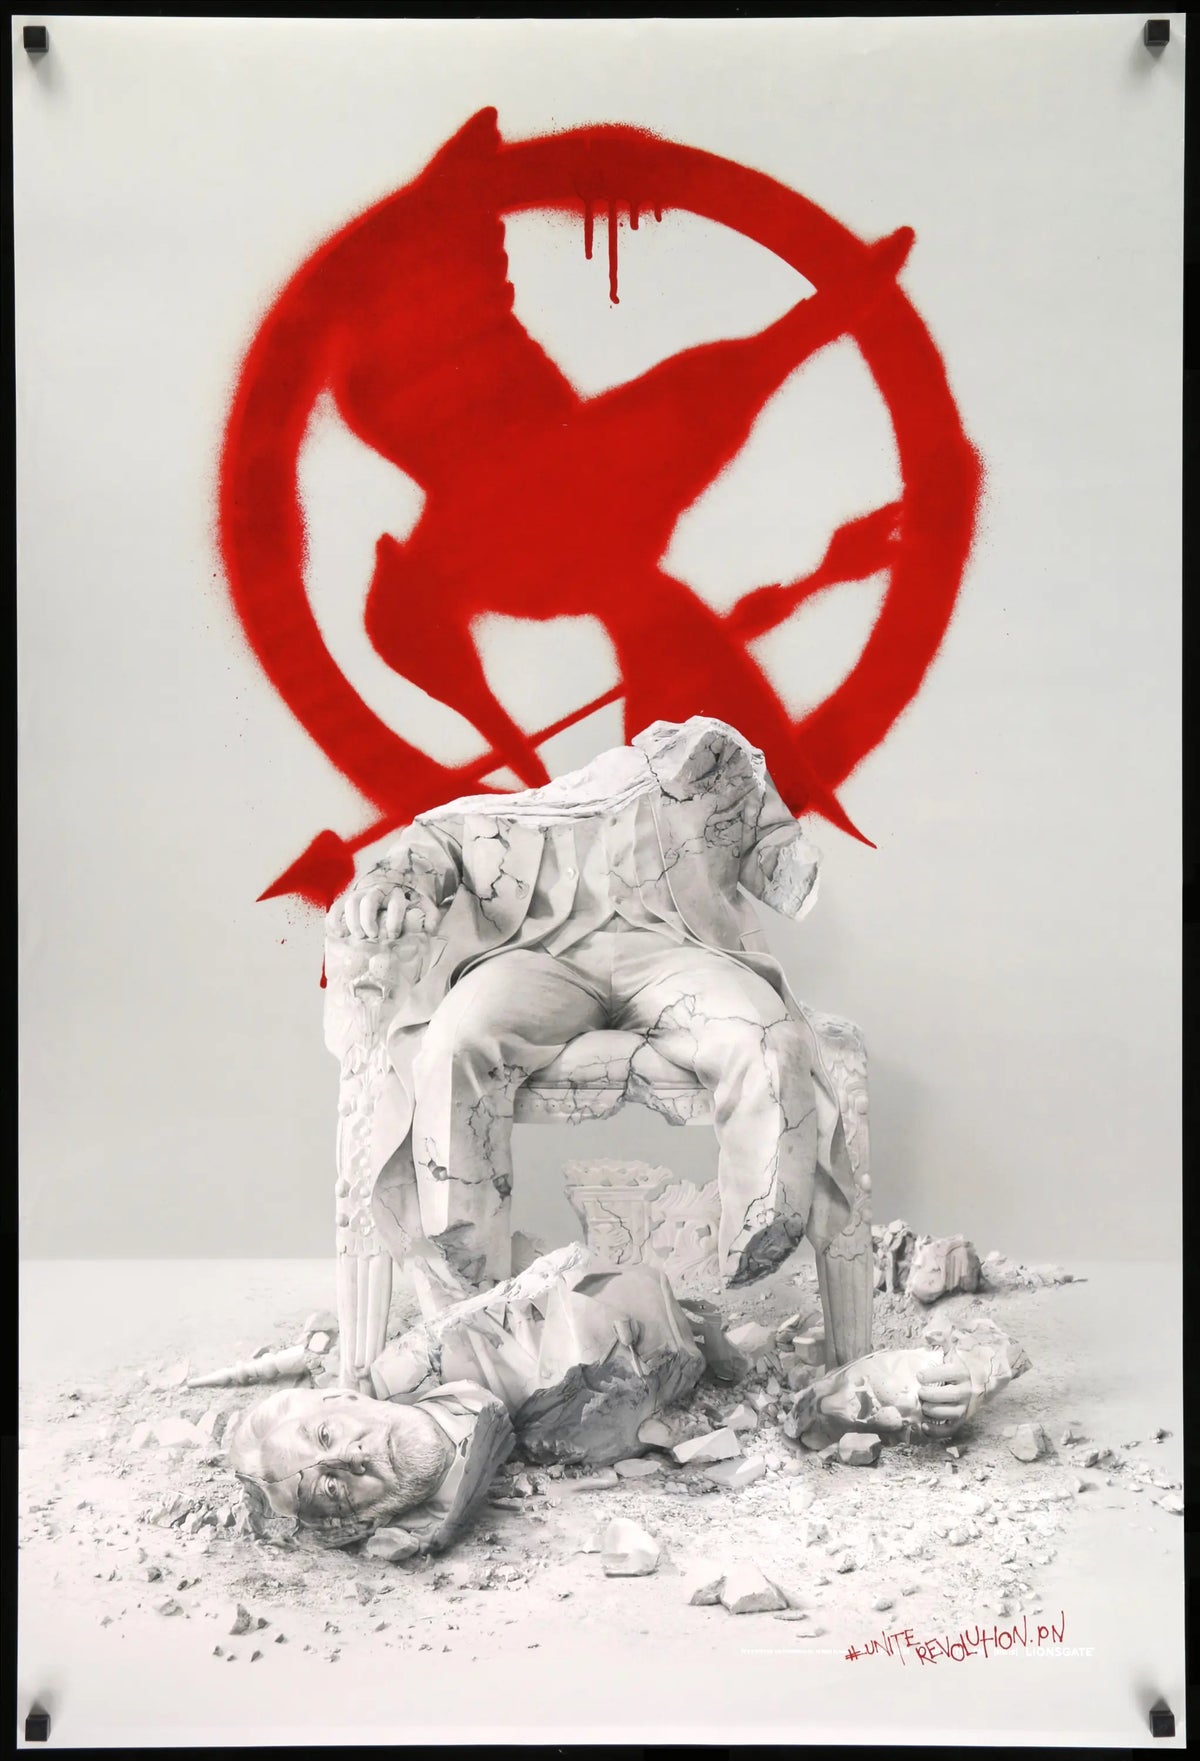 Hunger Games: Mockingjay Part 2 (2015) original movie poster for sale at Original Film Art